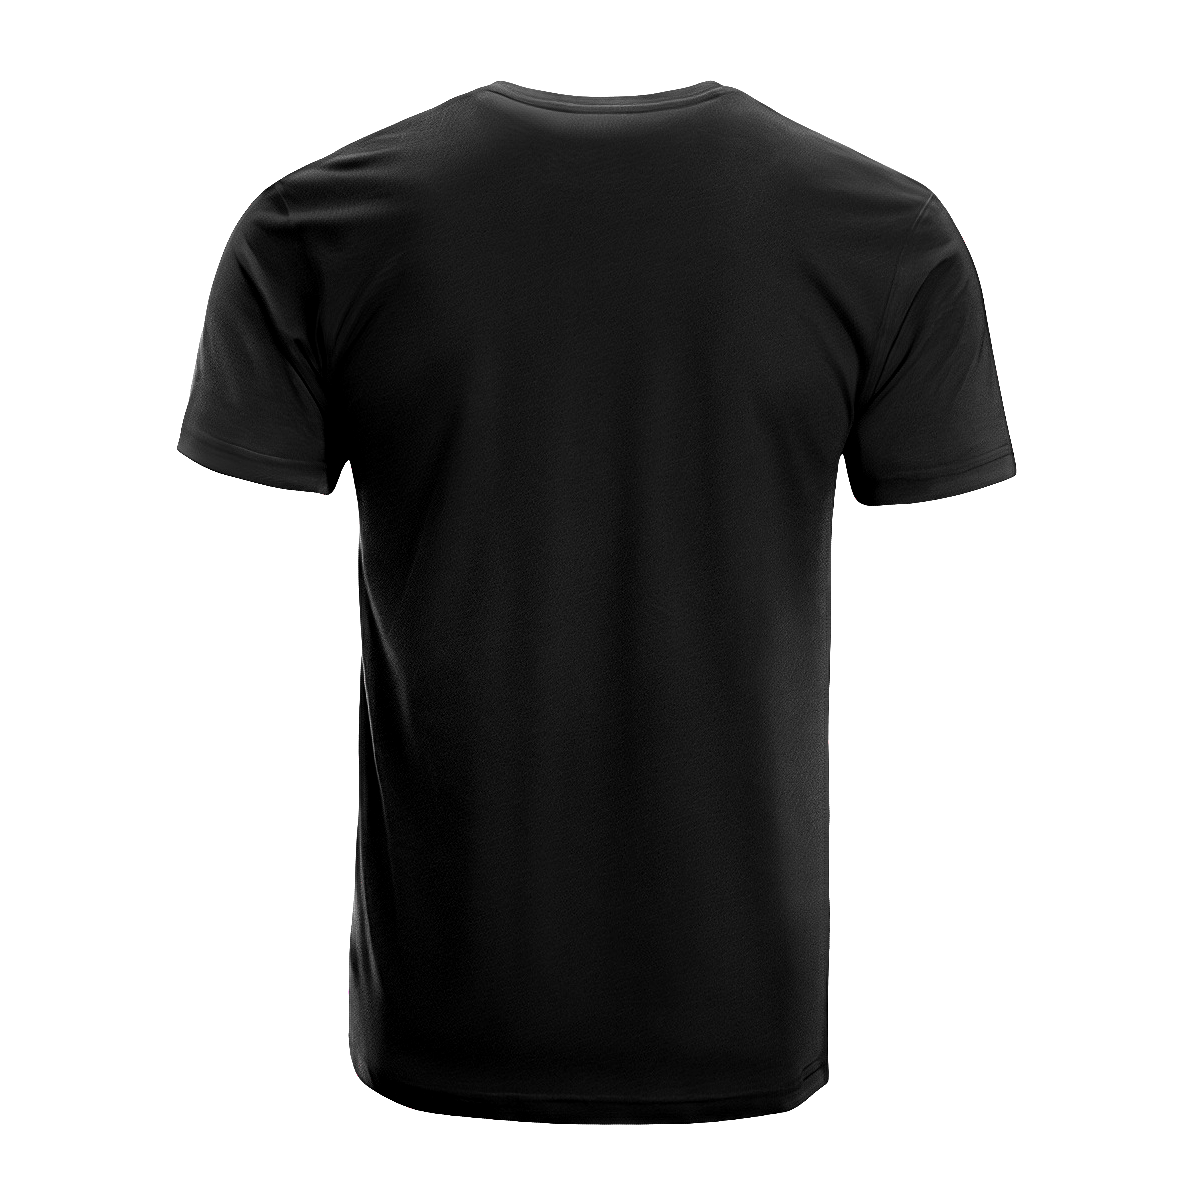 Aikenhead Tartan Crest T-shirt - I'm not yelling style